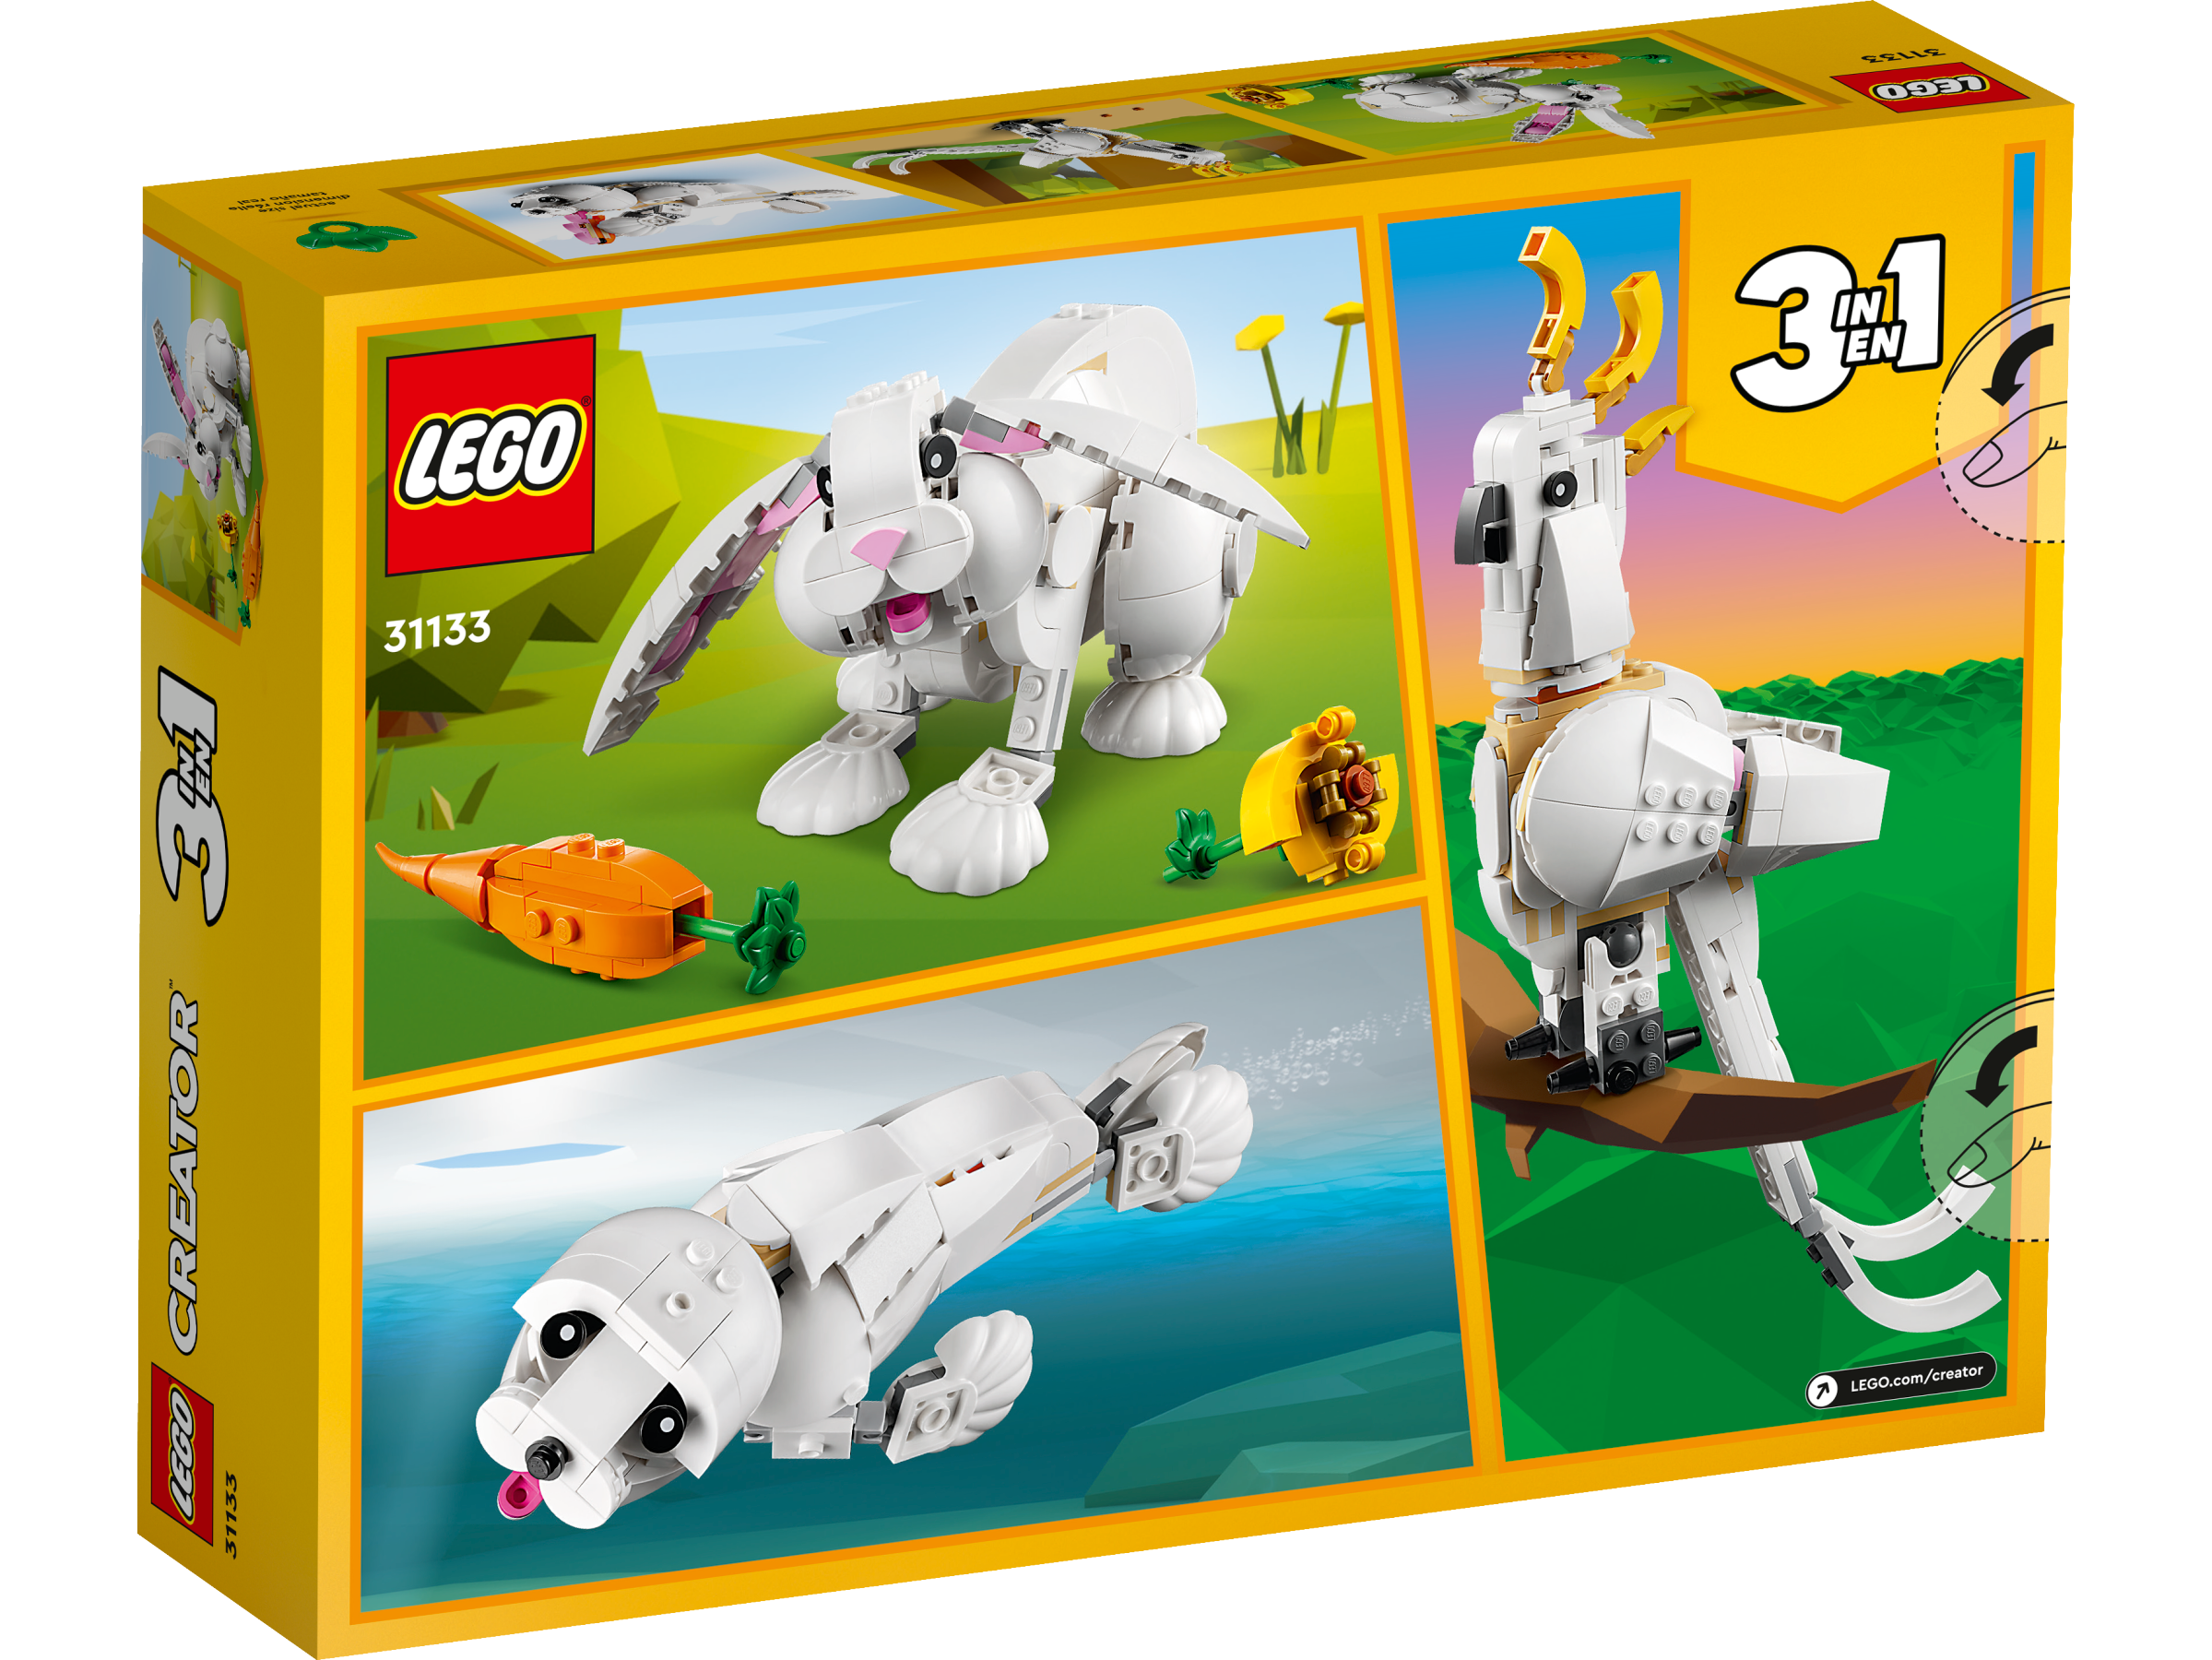 LEGO Creator 3in1: White Rabbit